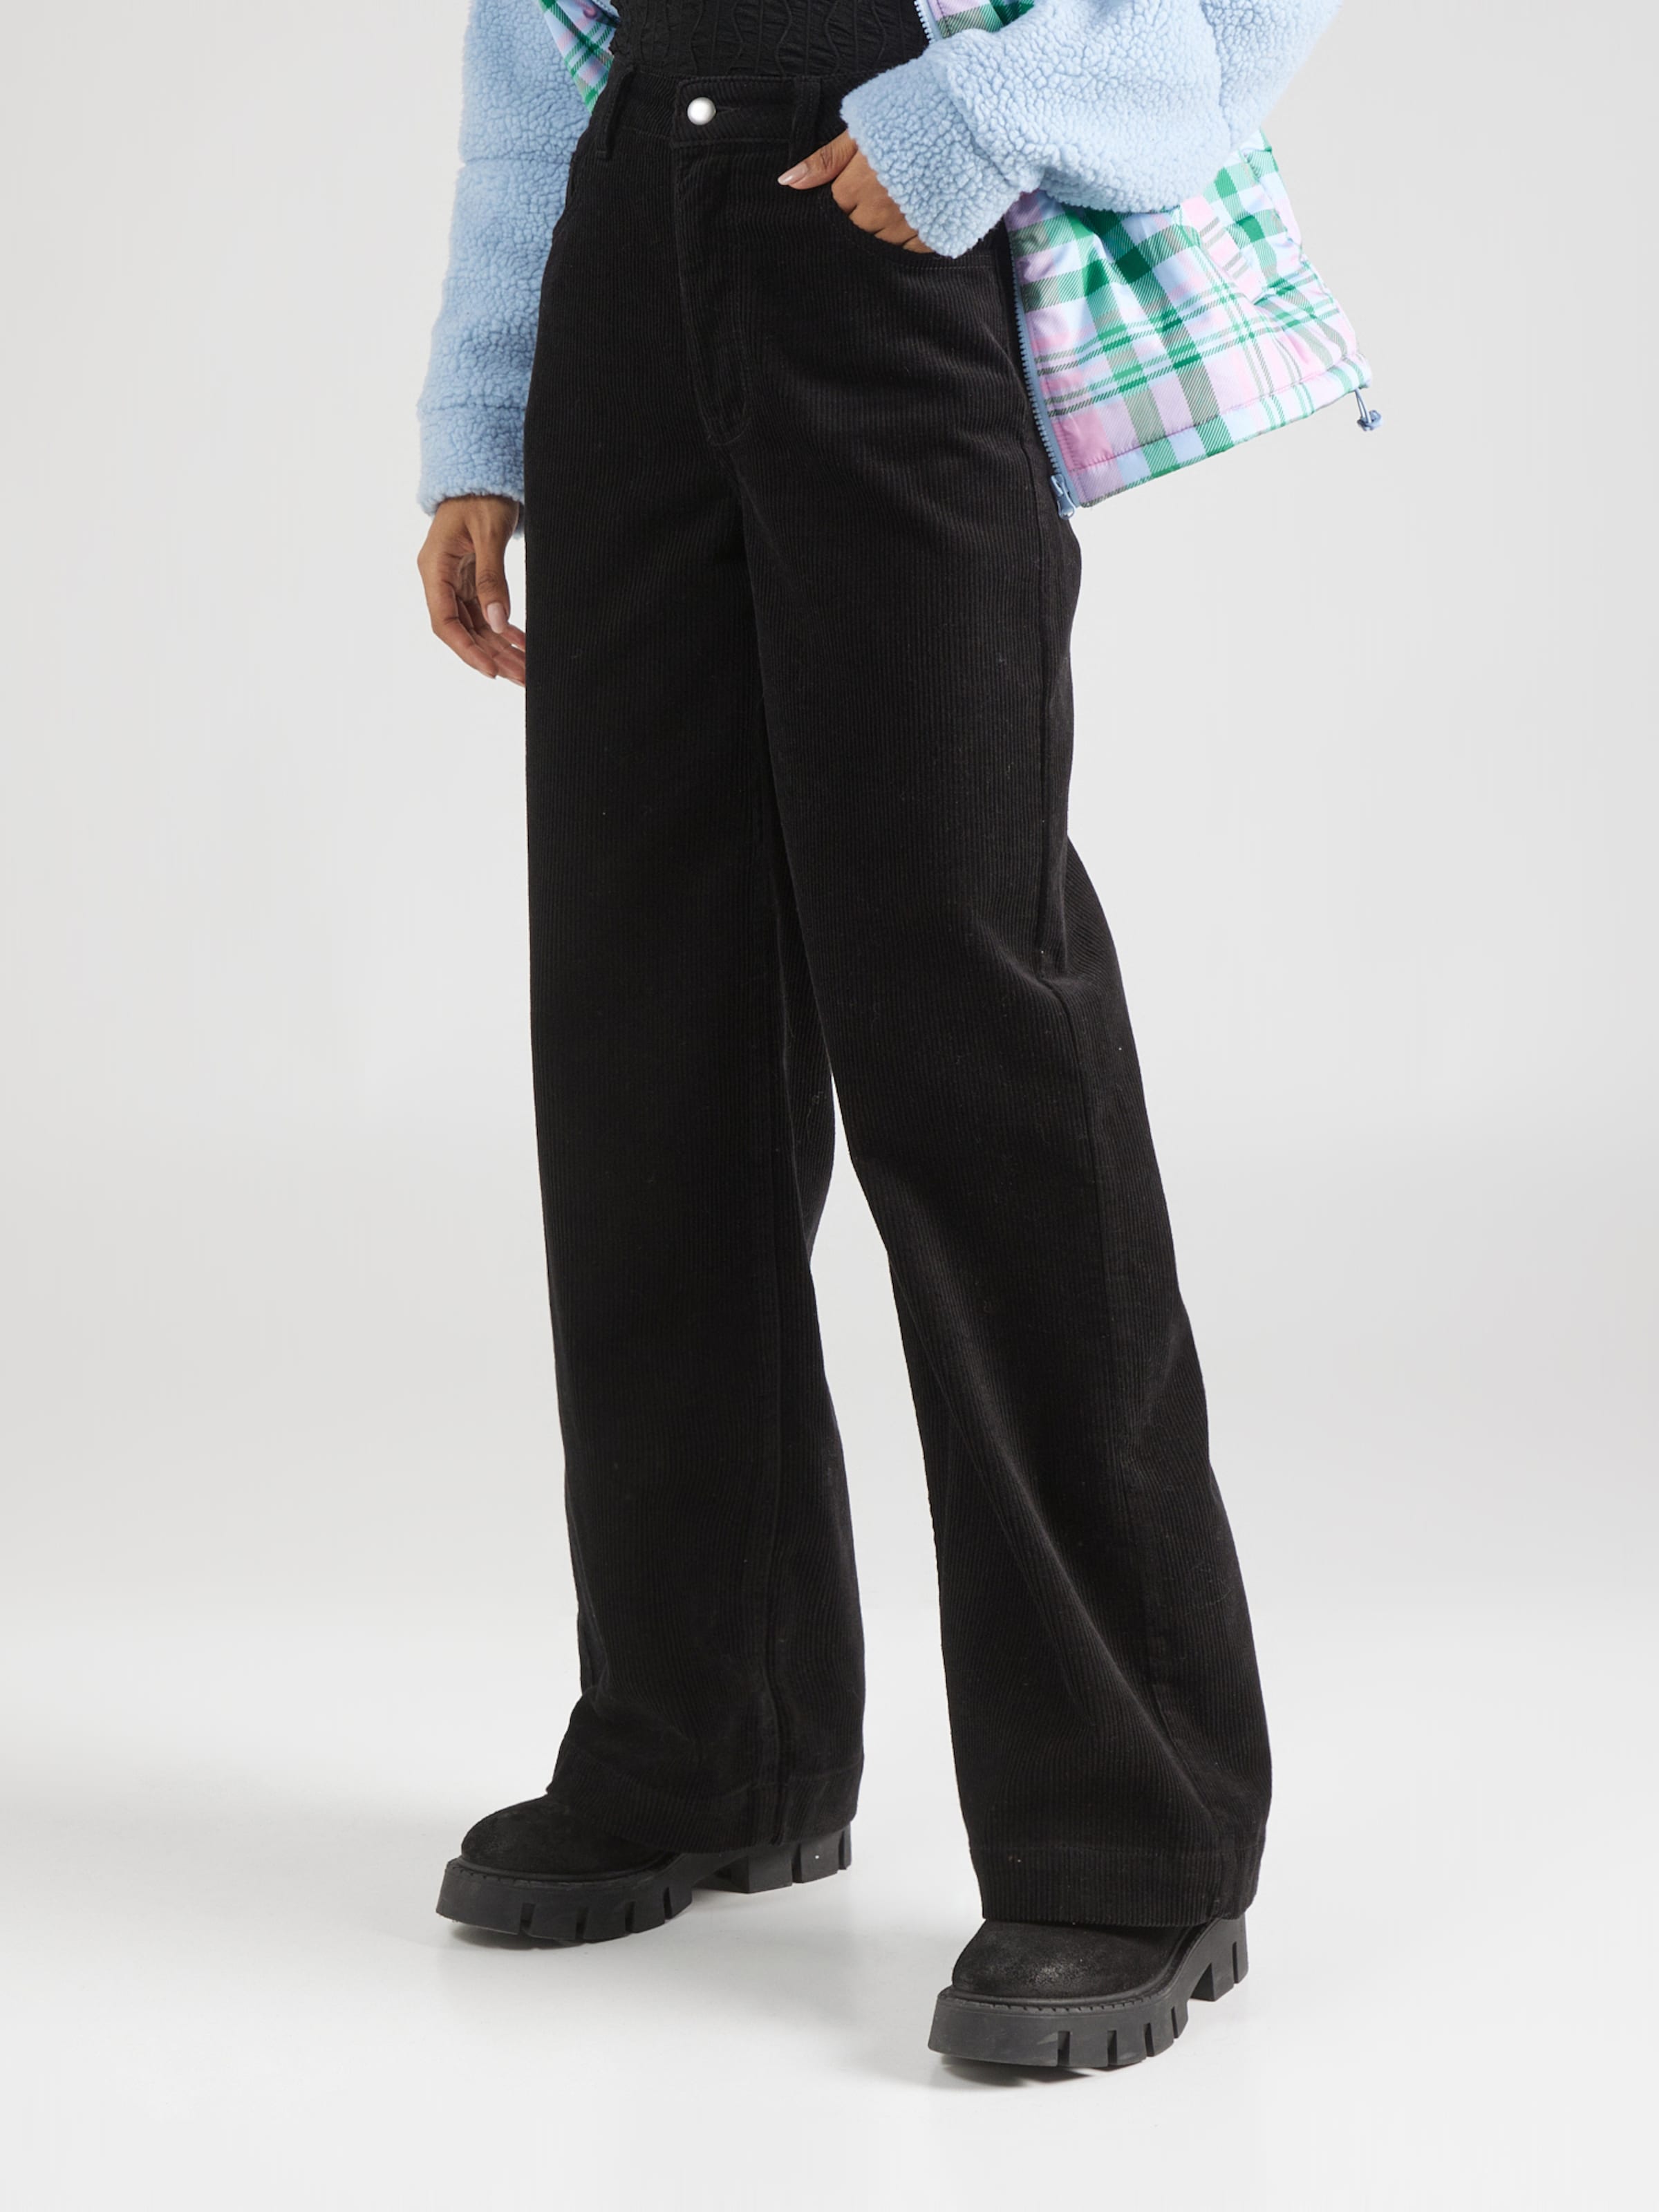 Corduroy trousers, green - shop online | Women | FRANKEN & Cie.